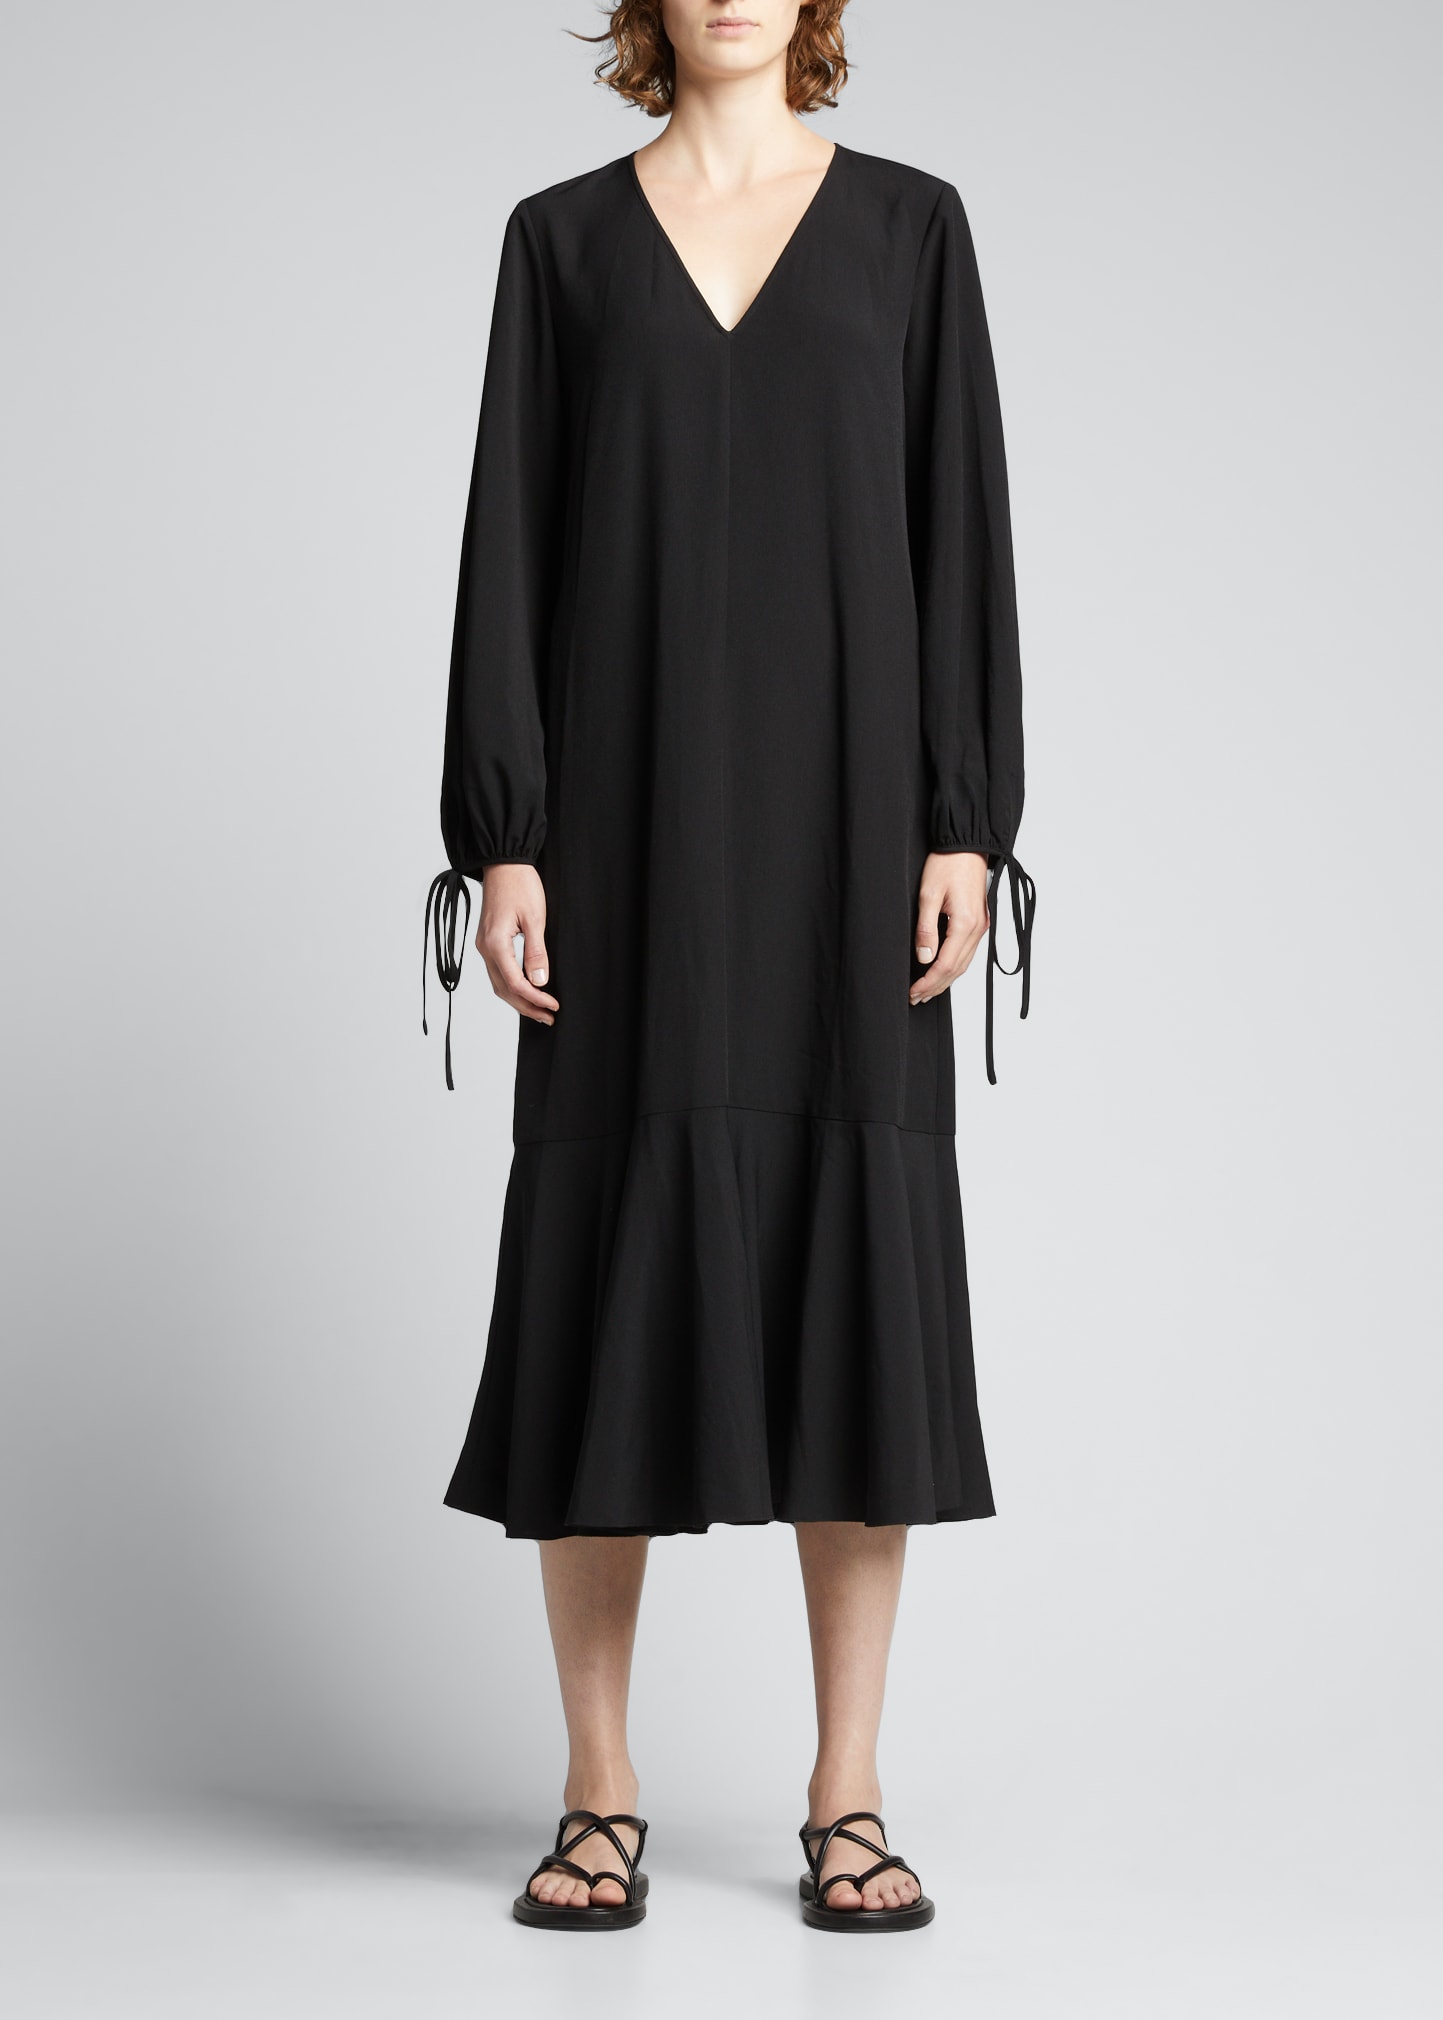 Chiara Boni La Petite Robe Custom Collection: Saturnnia 3/4-Sleeve ...